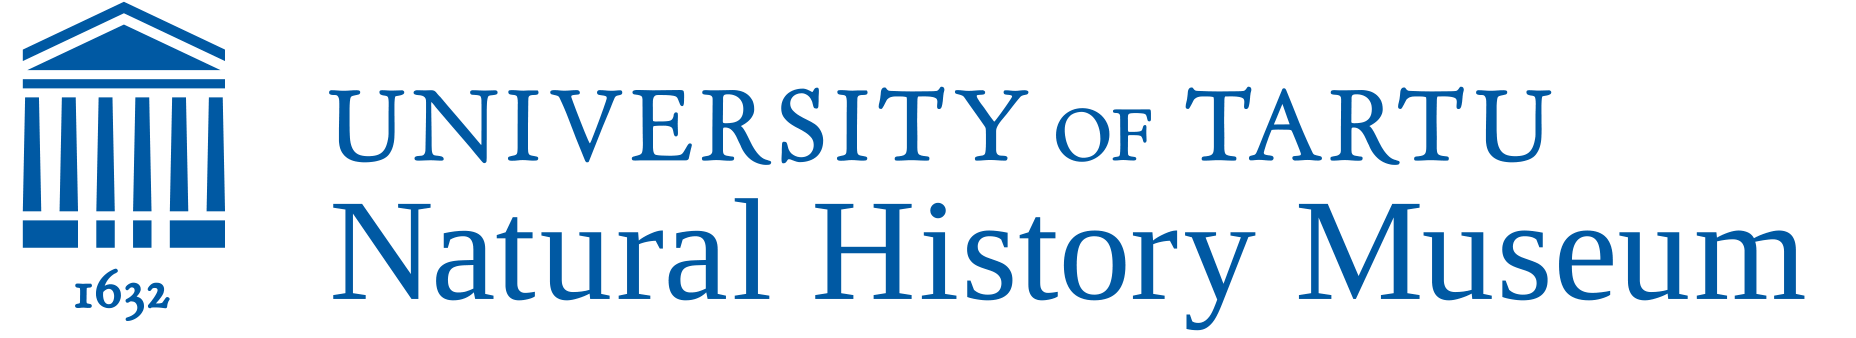 University of Tartu Natural History Museum logo